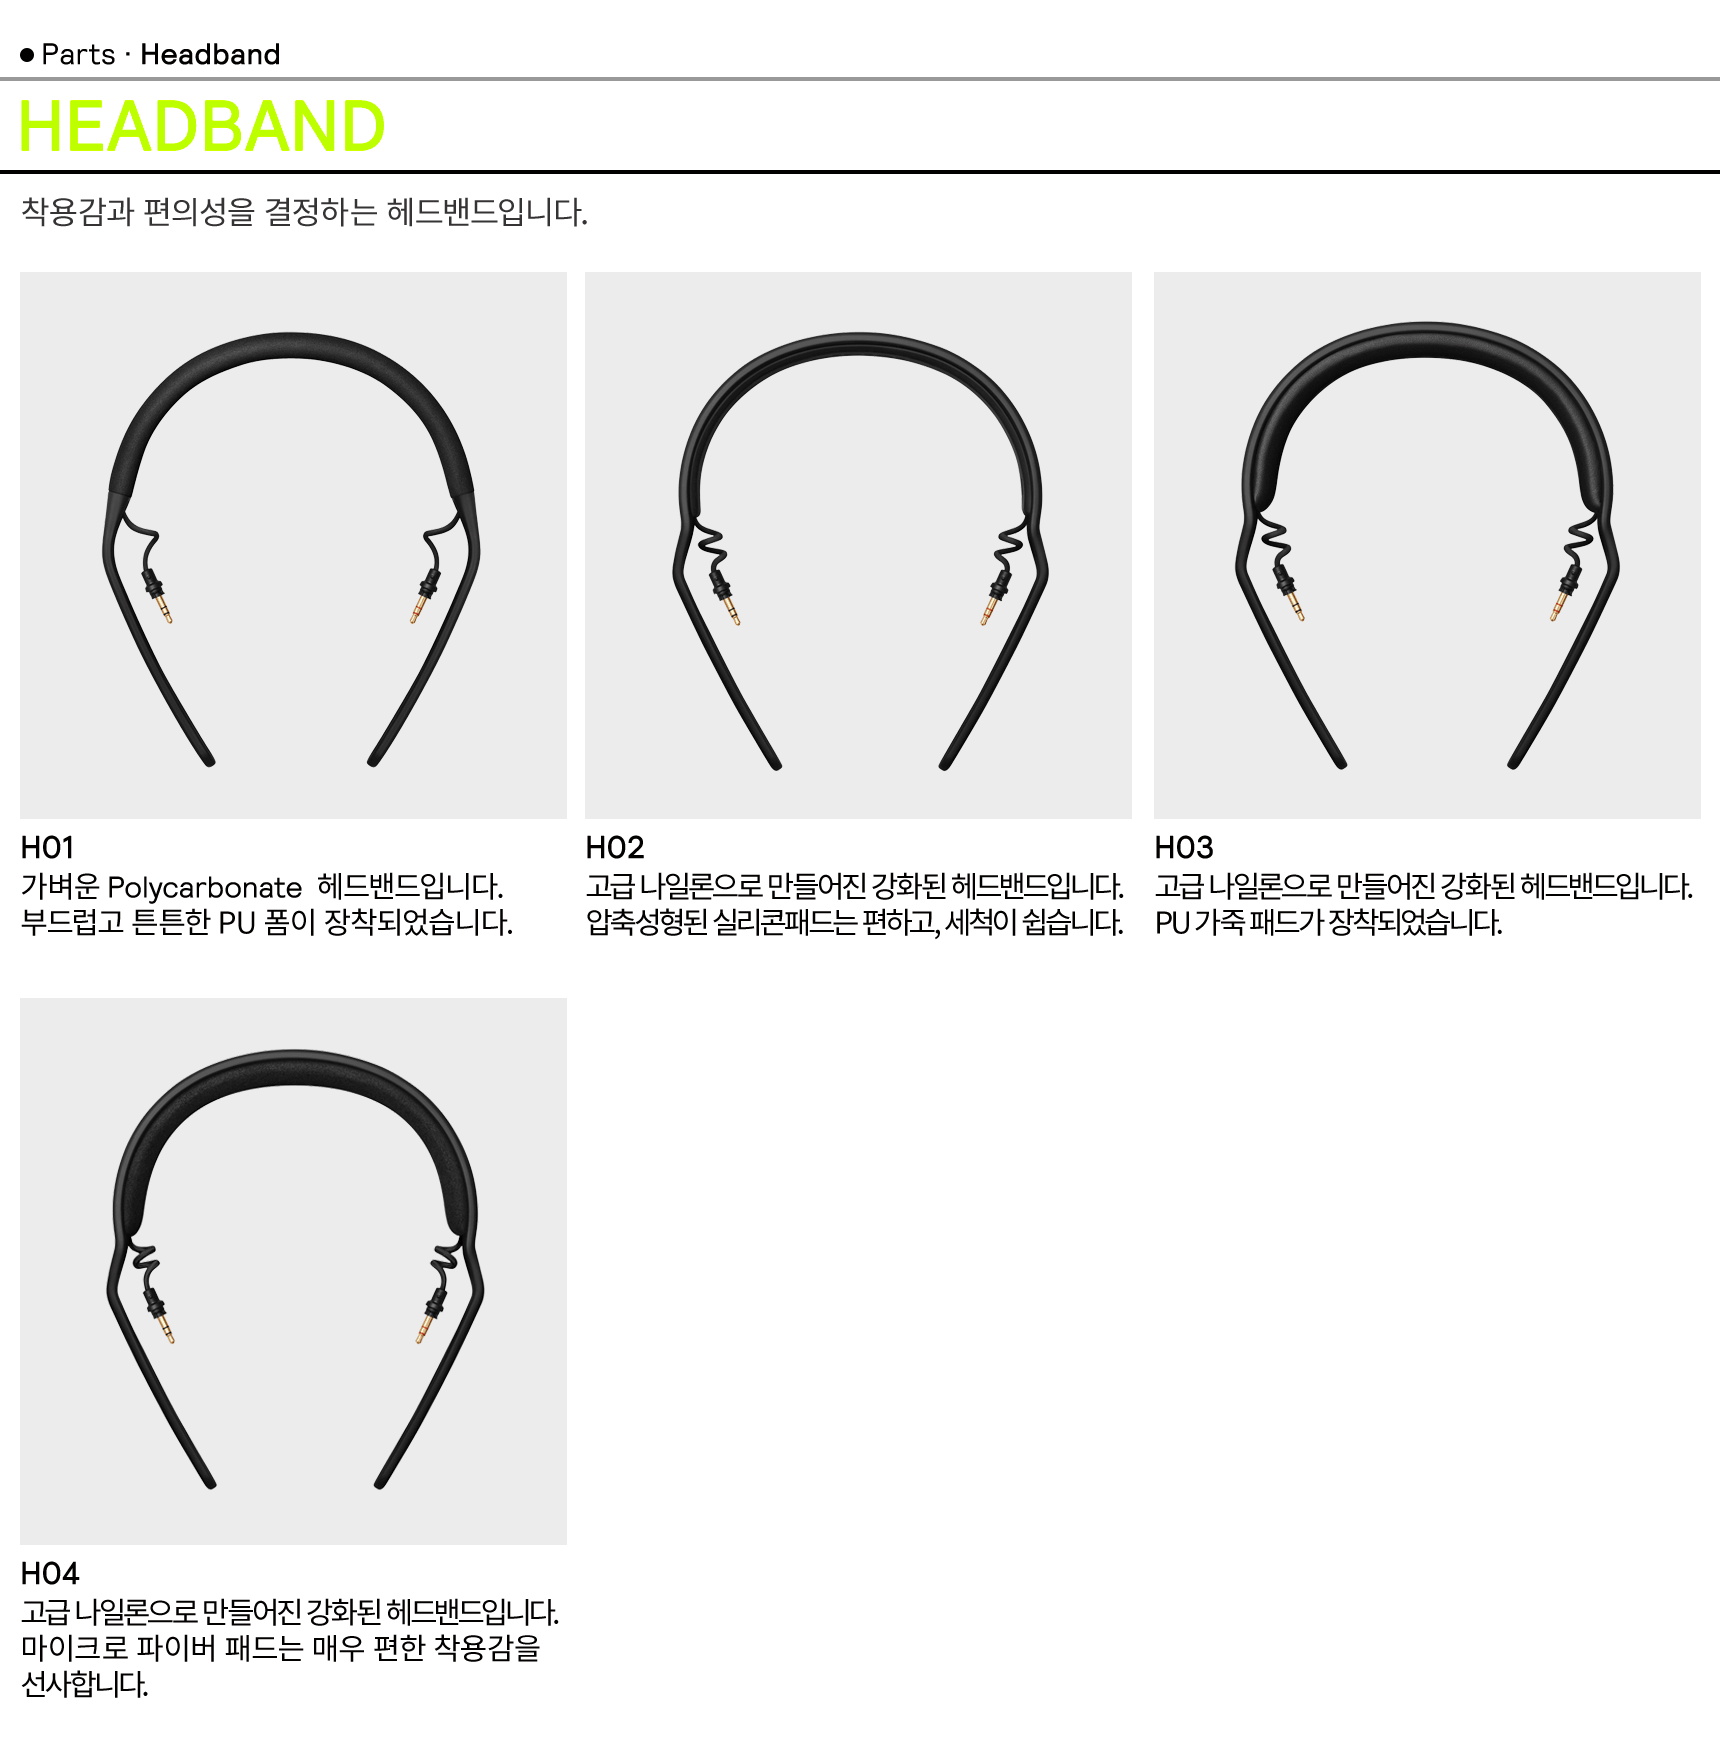 module_3_headband_114640.png